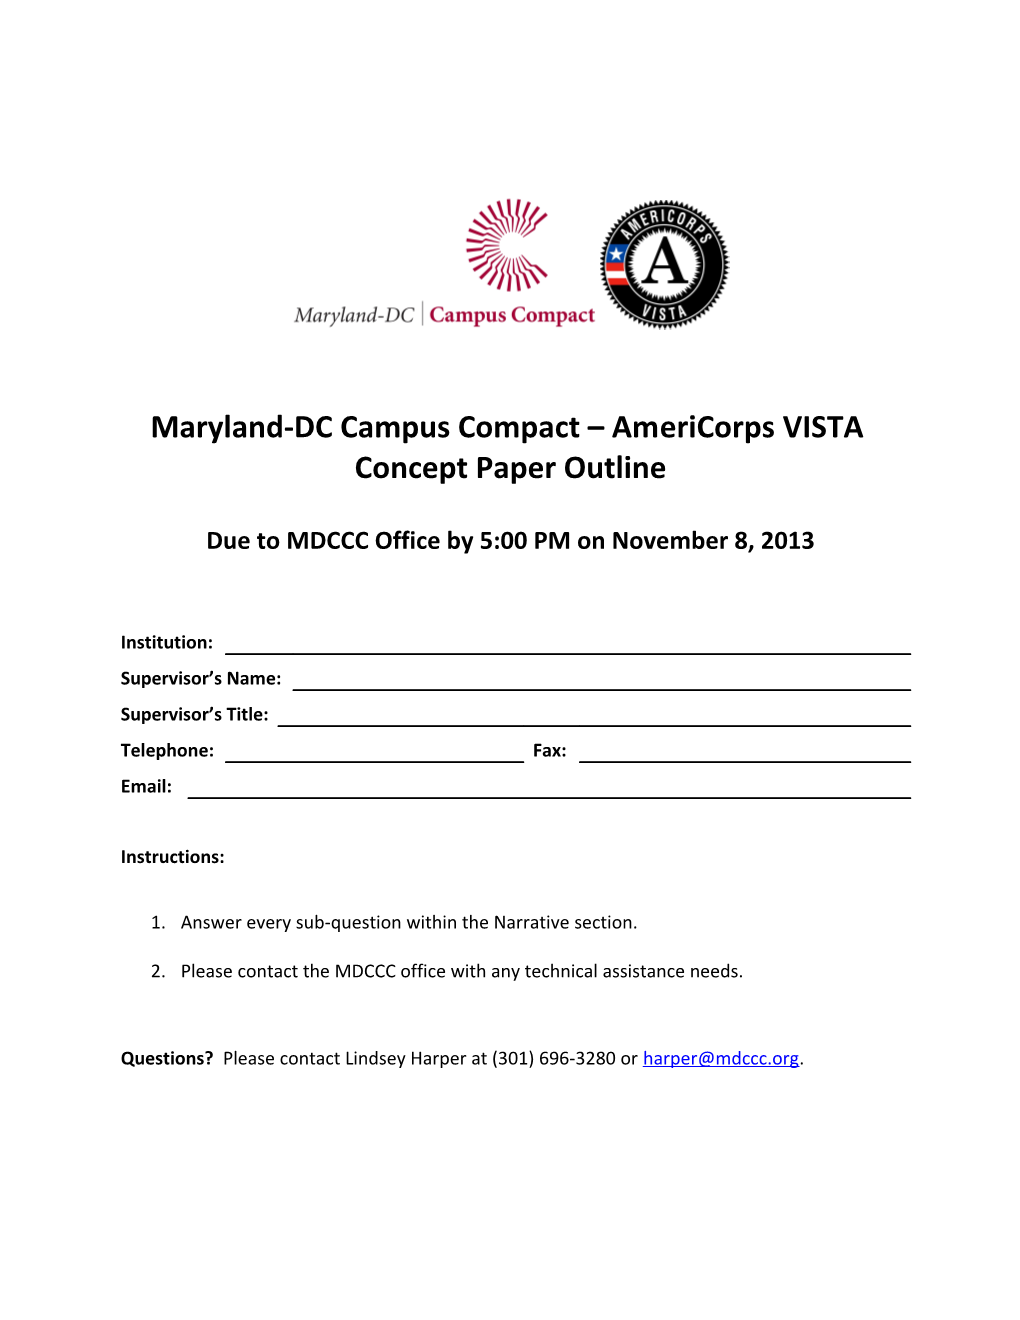 Maryland-DC Campus Compact Americorps VISTA